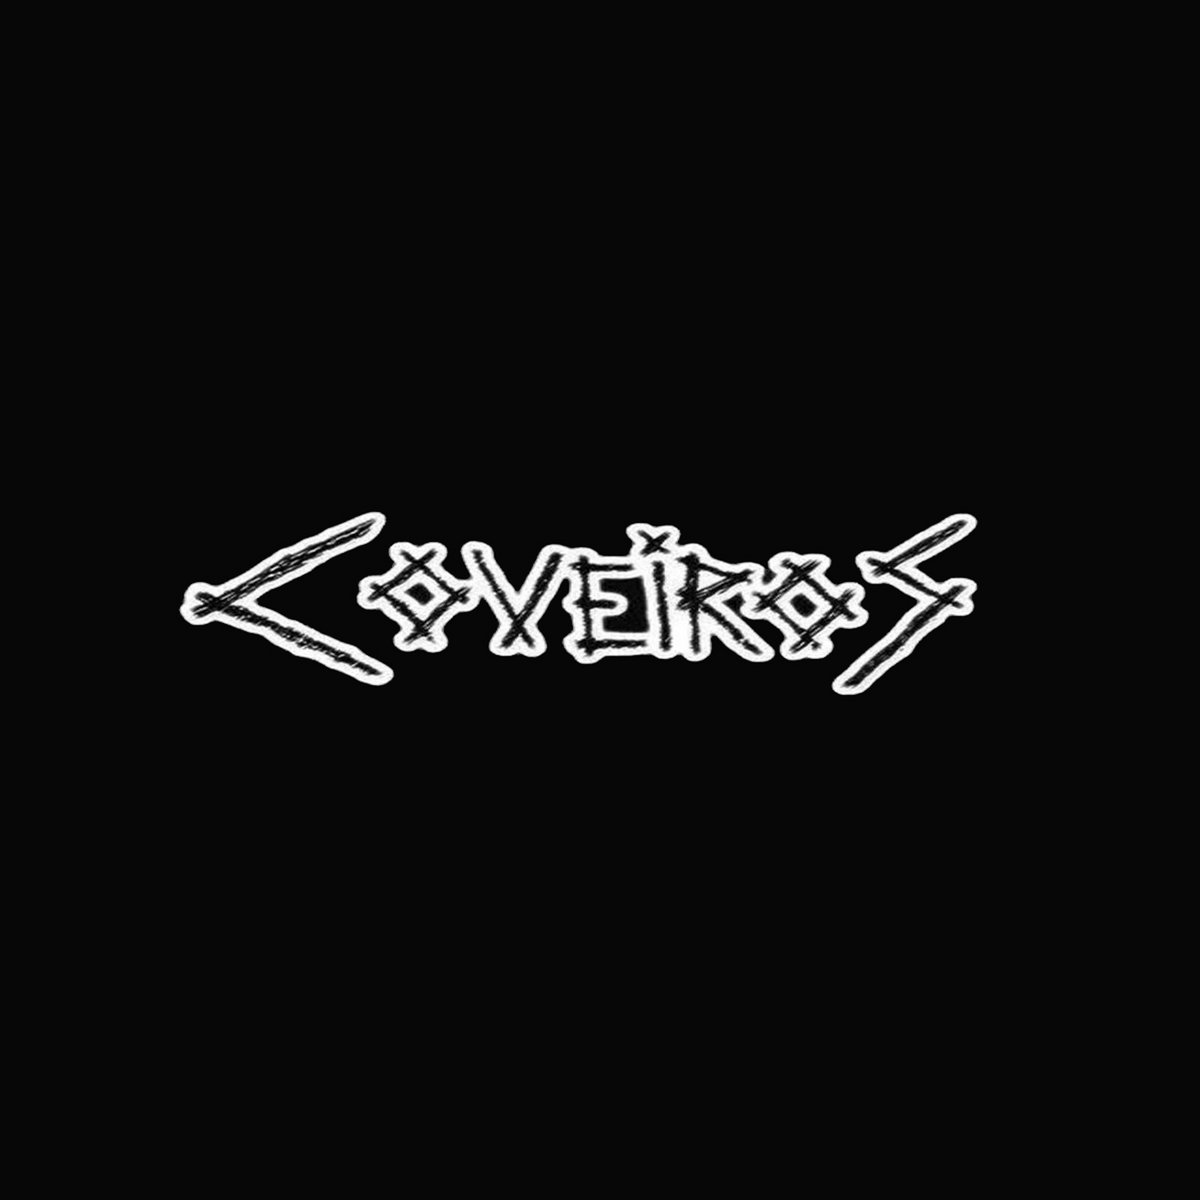 Coveiros - Coveiros - Encyclopaedia Metallum: The Metal Archives